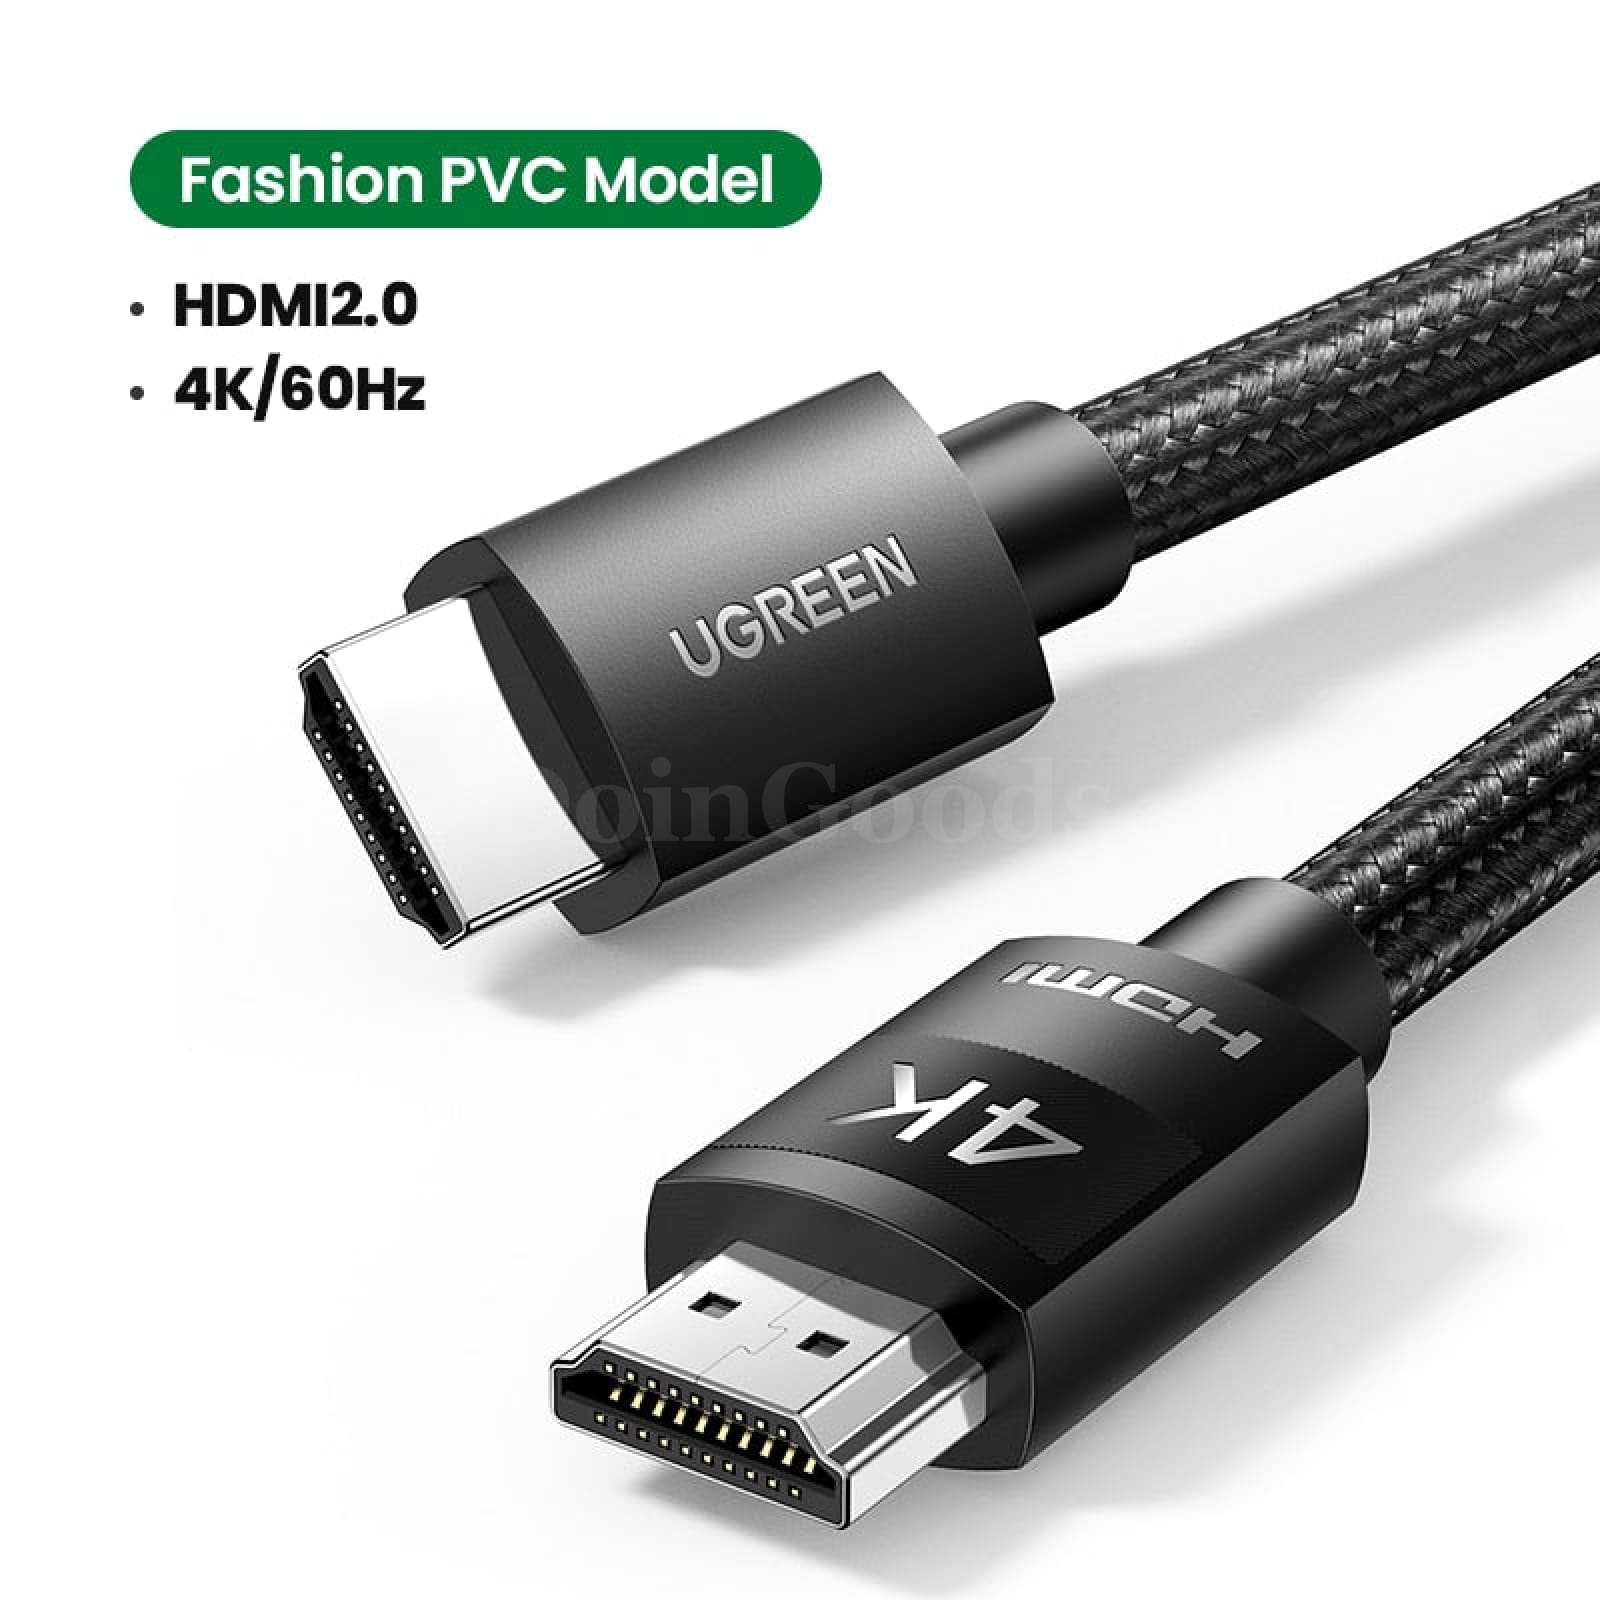 Ugreen Hdmi Cable 4K/60Hz - Audio Switch Splitter For Tv Box Ps4 4K Pvc Model / 0.5M 301635